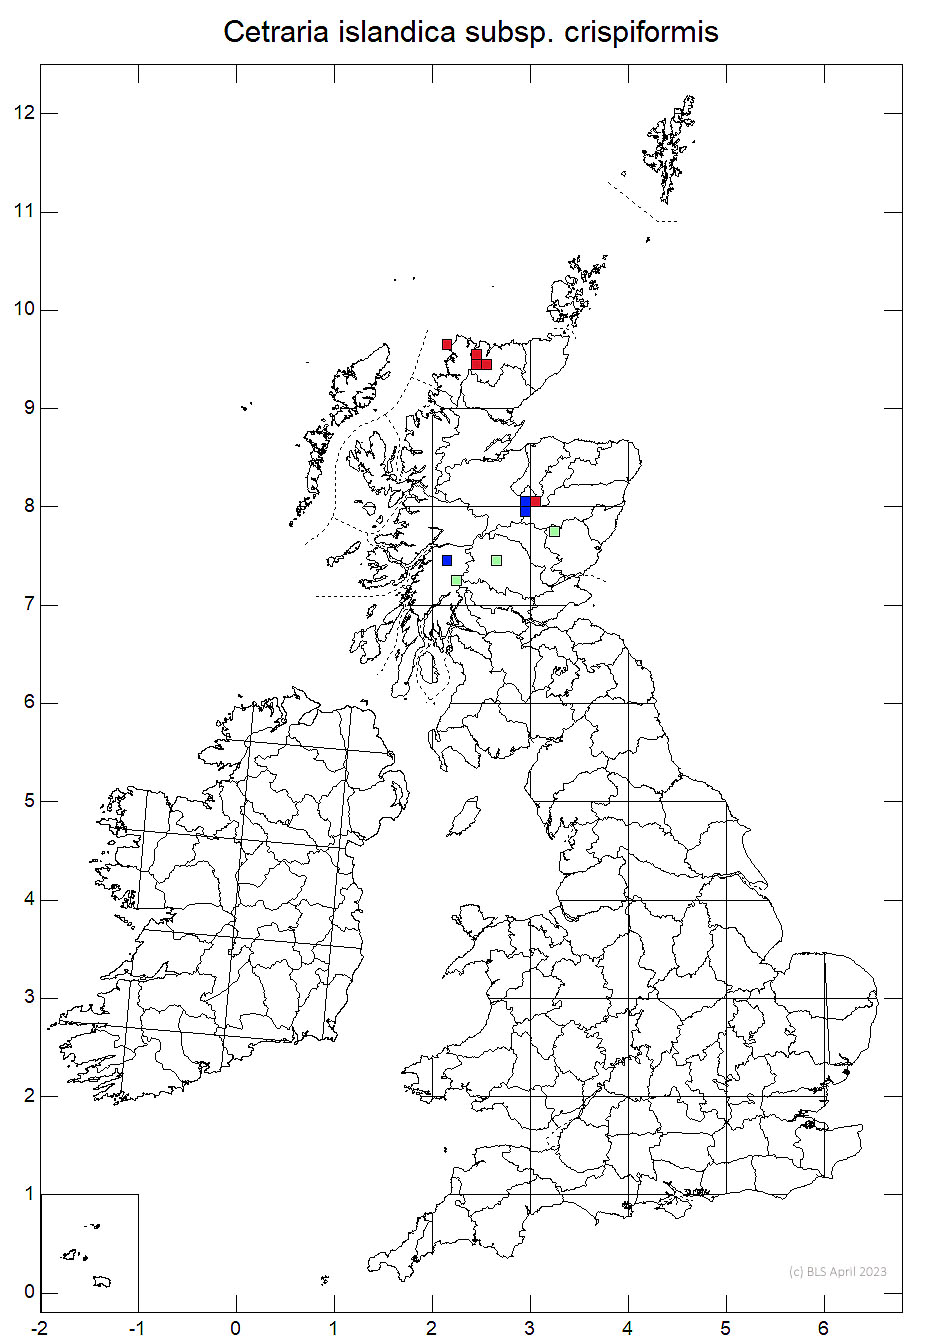 Cetraria islandica subsp. crispiformis 10km sq distribution map